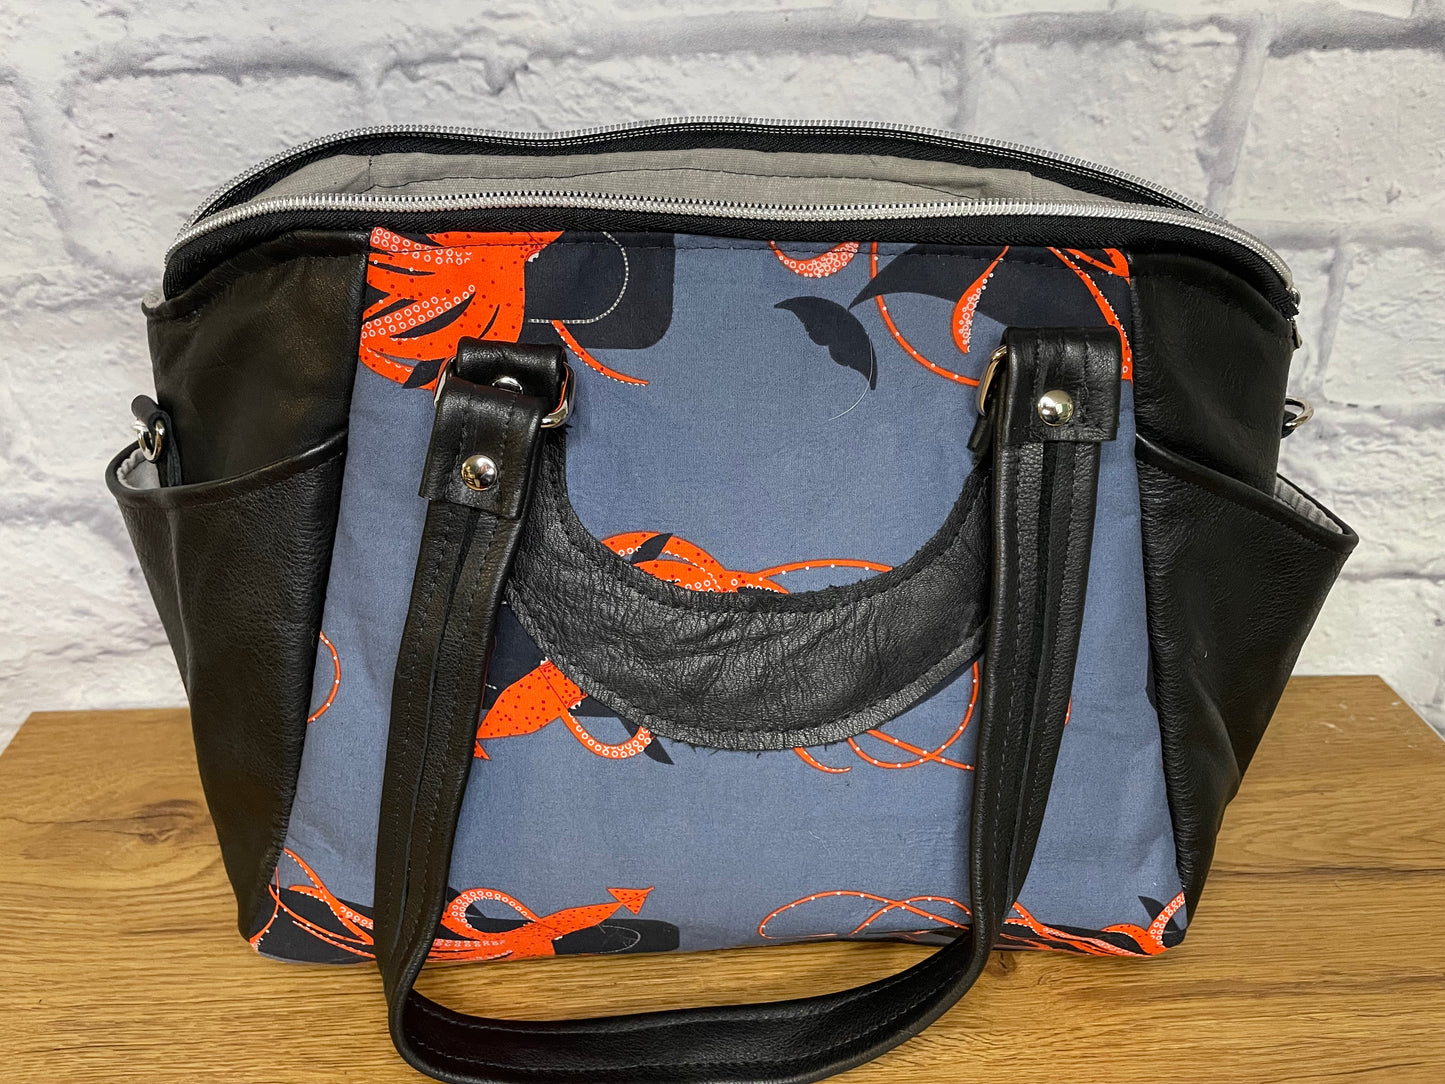 Kraken Handbag - made to order